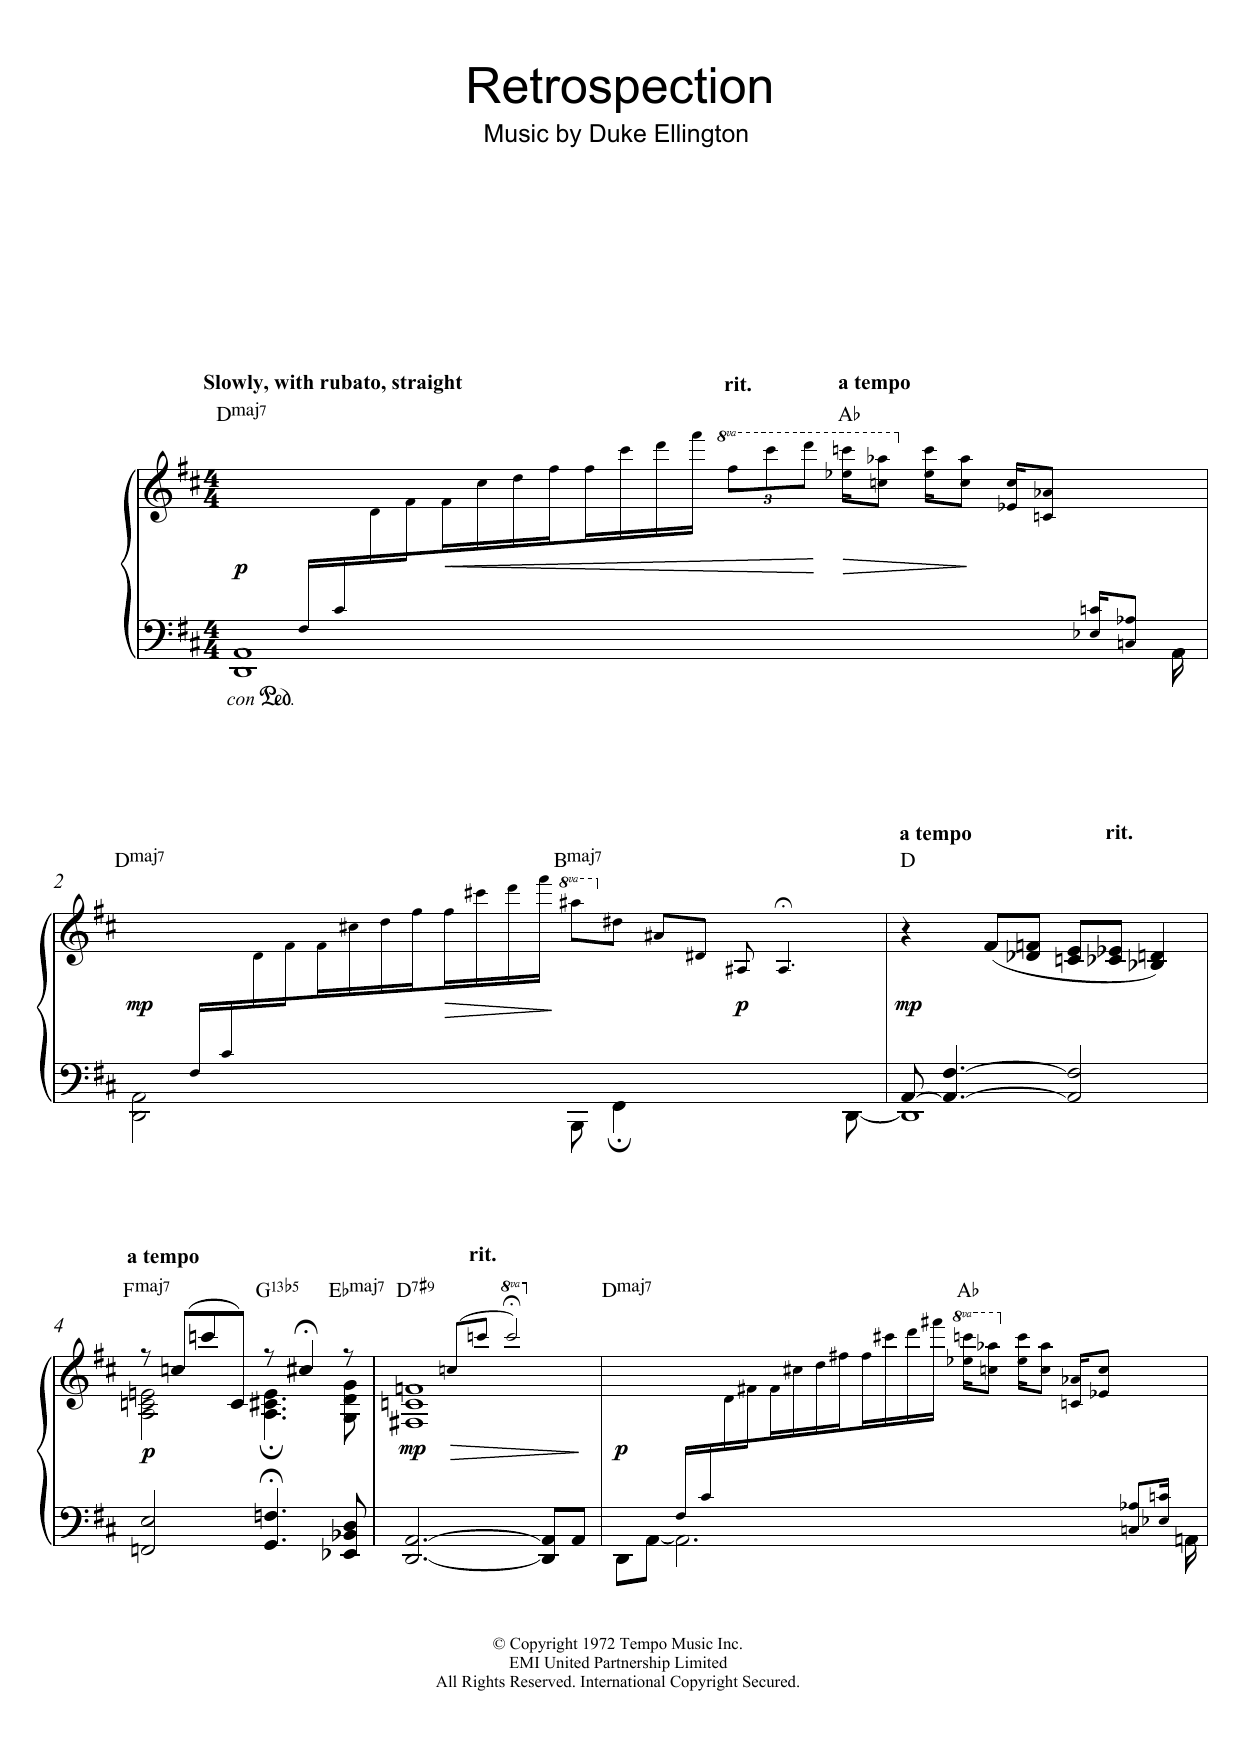 Duke Ellington Retrospection Sheet Music Notes & Chords for Piano - Download or Print PDF